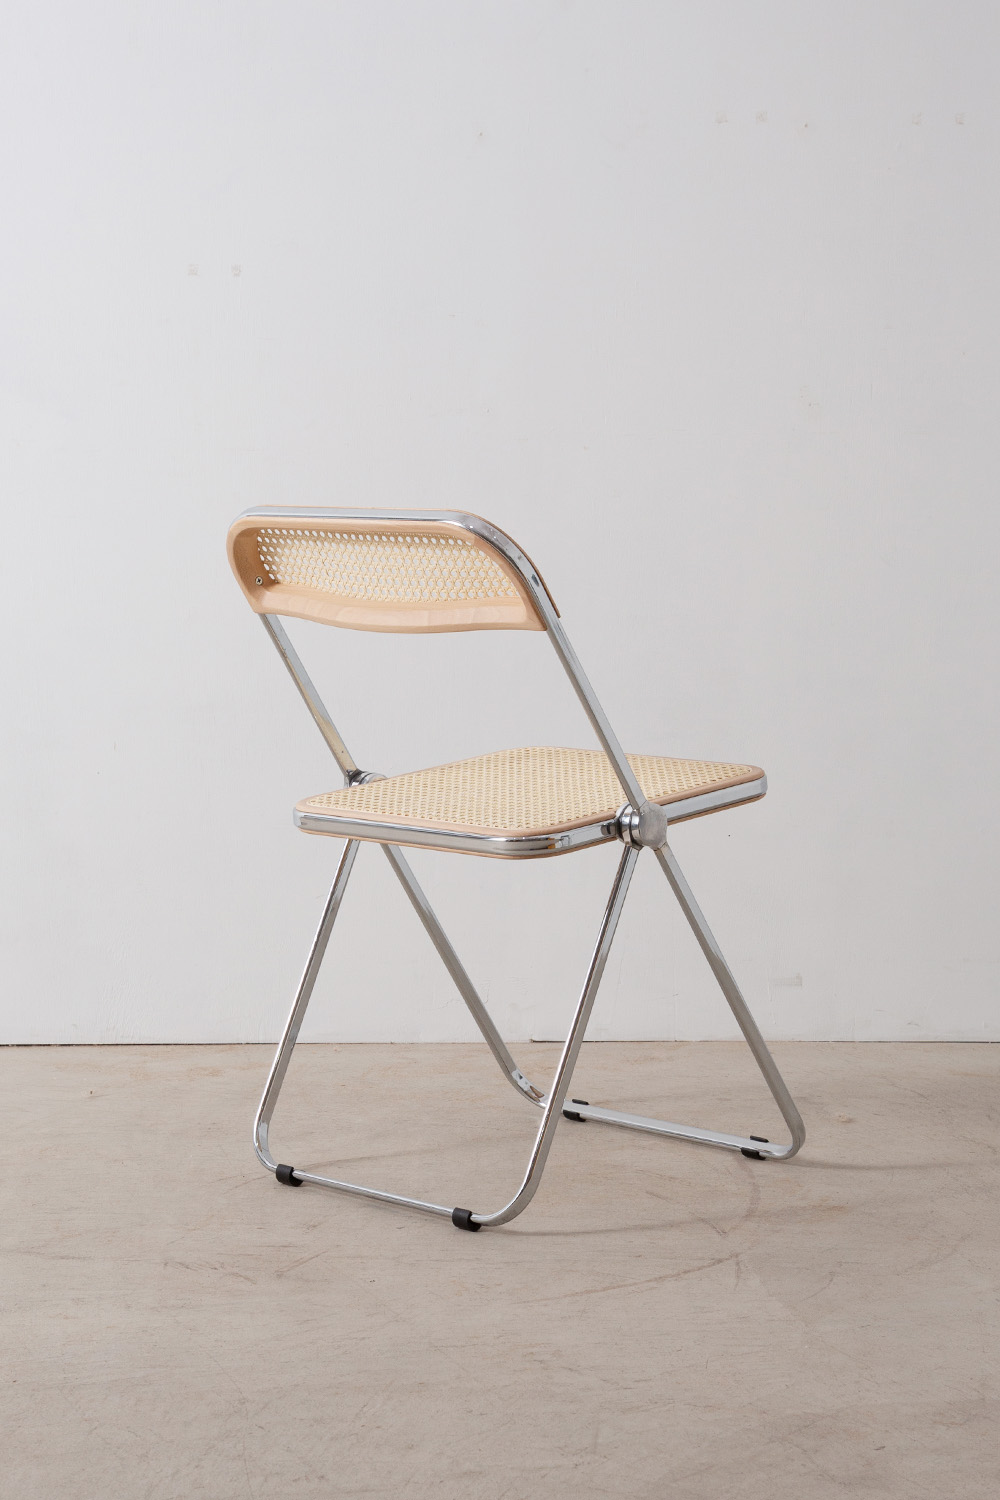 stoop | Plia Chair by Giancarlo Piretti for ANONIMA CASTELLI in 